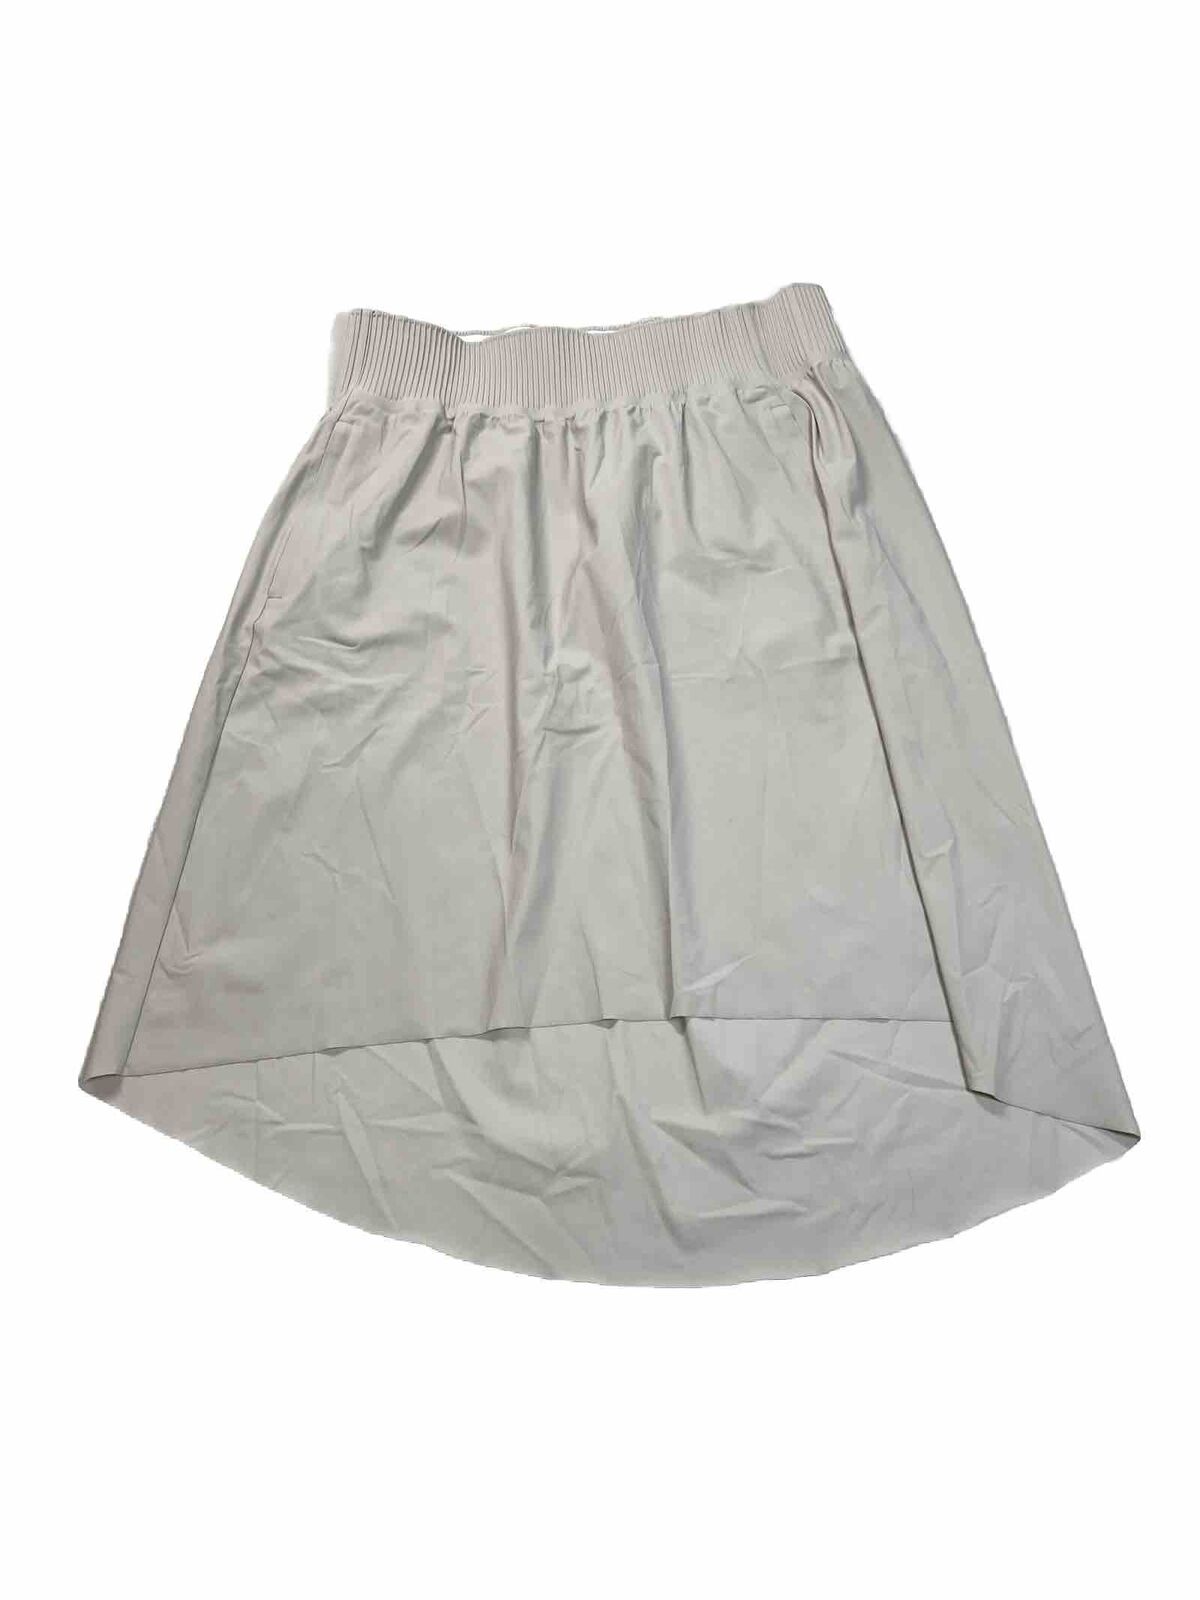 Athleta Women's Beige Unlined Cosmic Skirt with Pockets - M